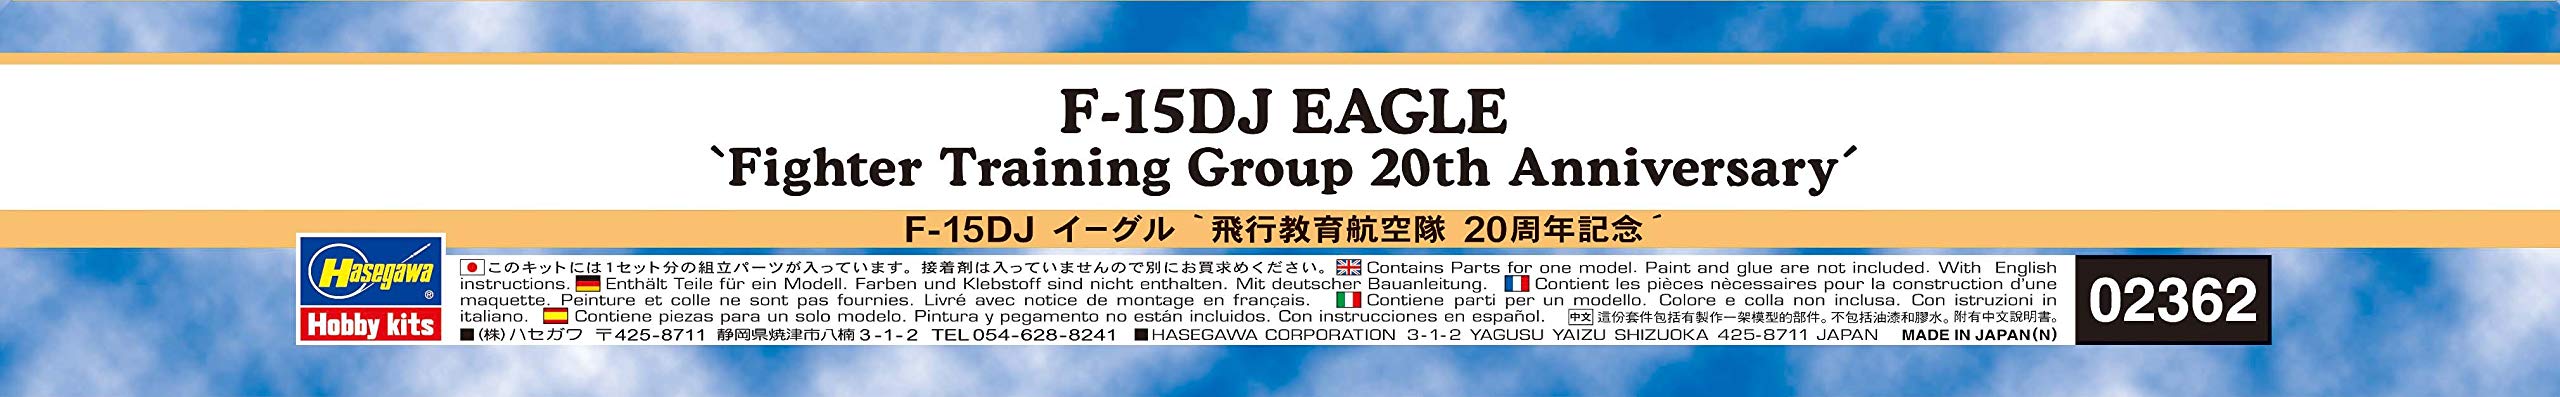 HASEGAWA 1/72 F-15Dj Eagle 'Fighter Training Group 20th Anniversary' Plastikmodell